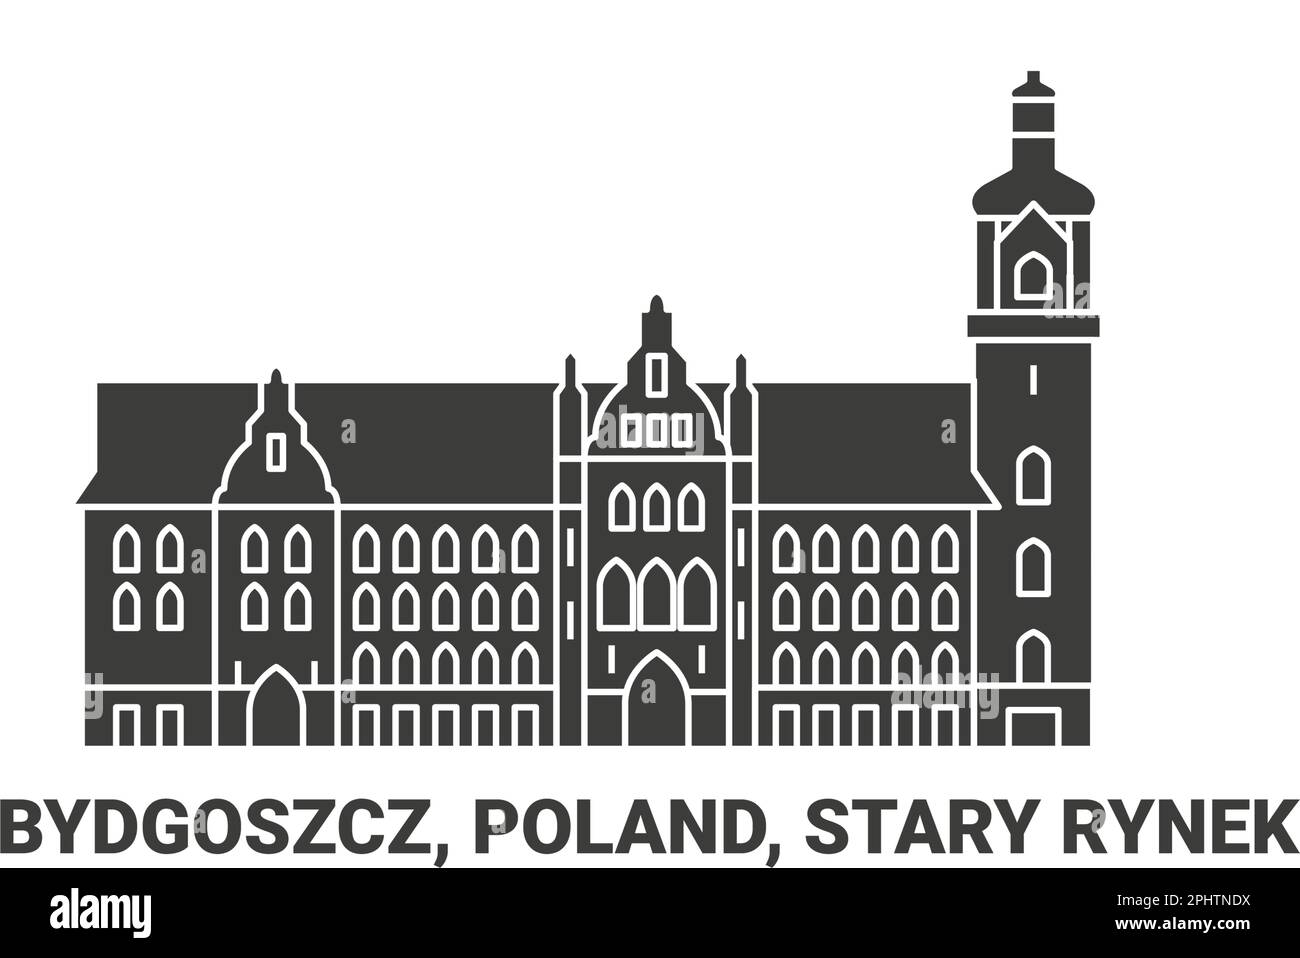 Poland, Bydgoszcz, Stary Rynek travel landmark vector illustration Stock Vector